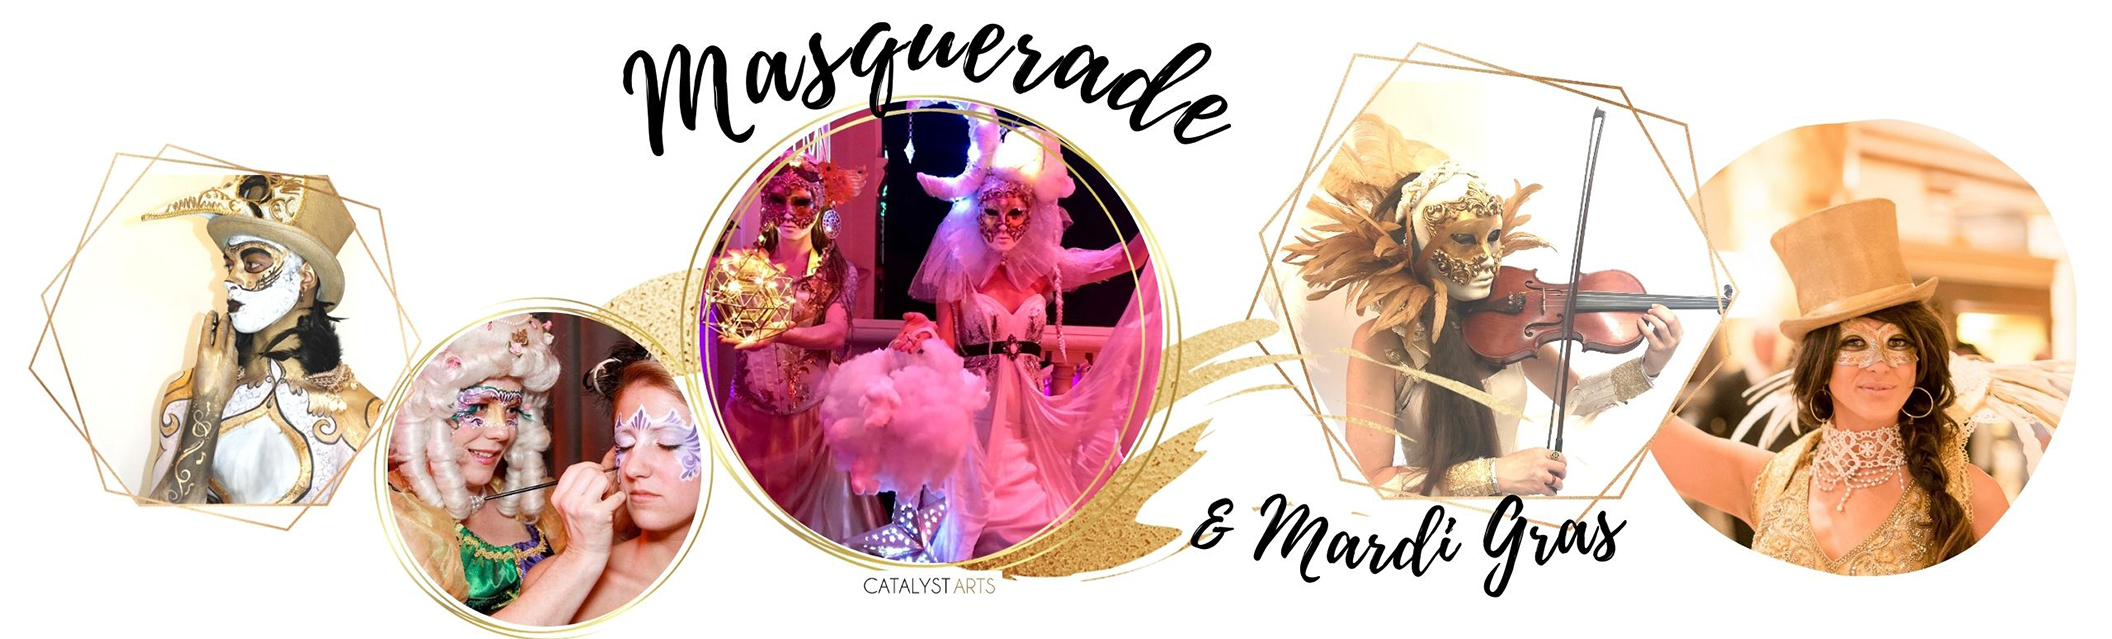 Masquerade & Mardi Gras Entertainment by Catalyst Arts in California 